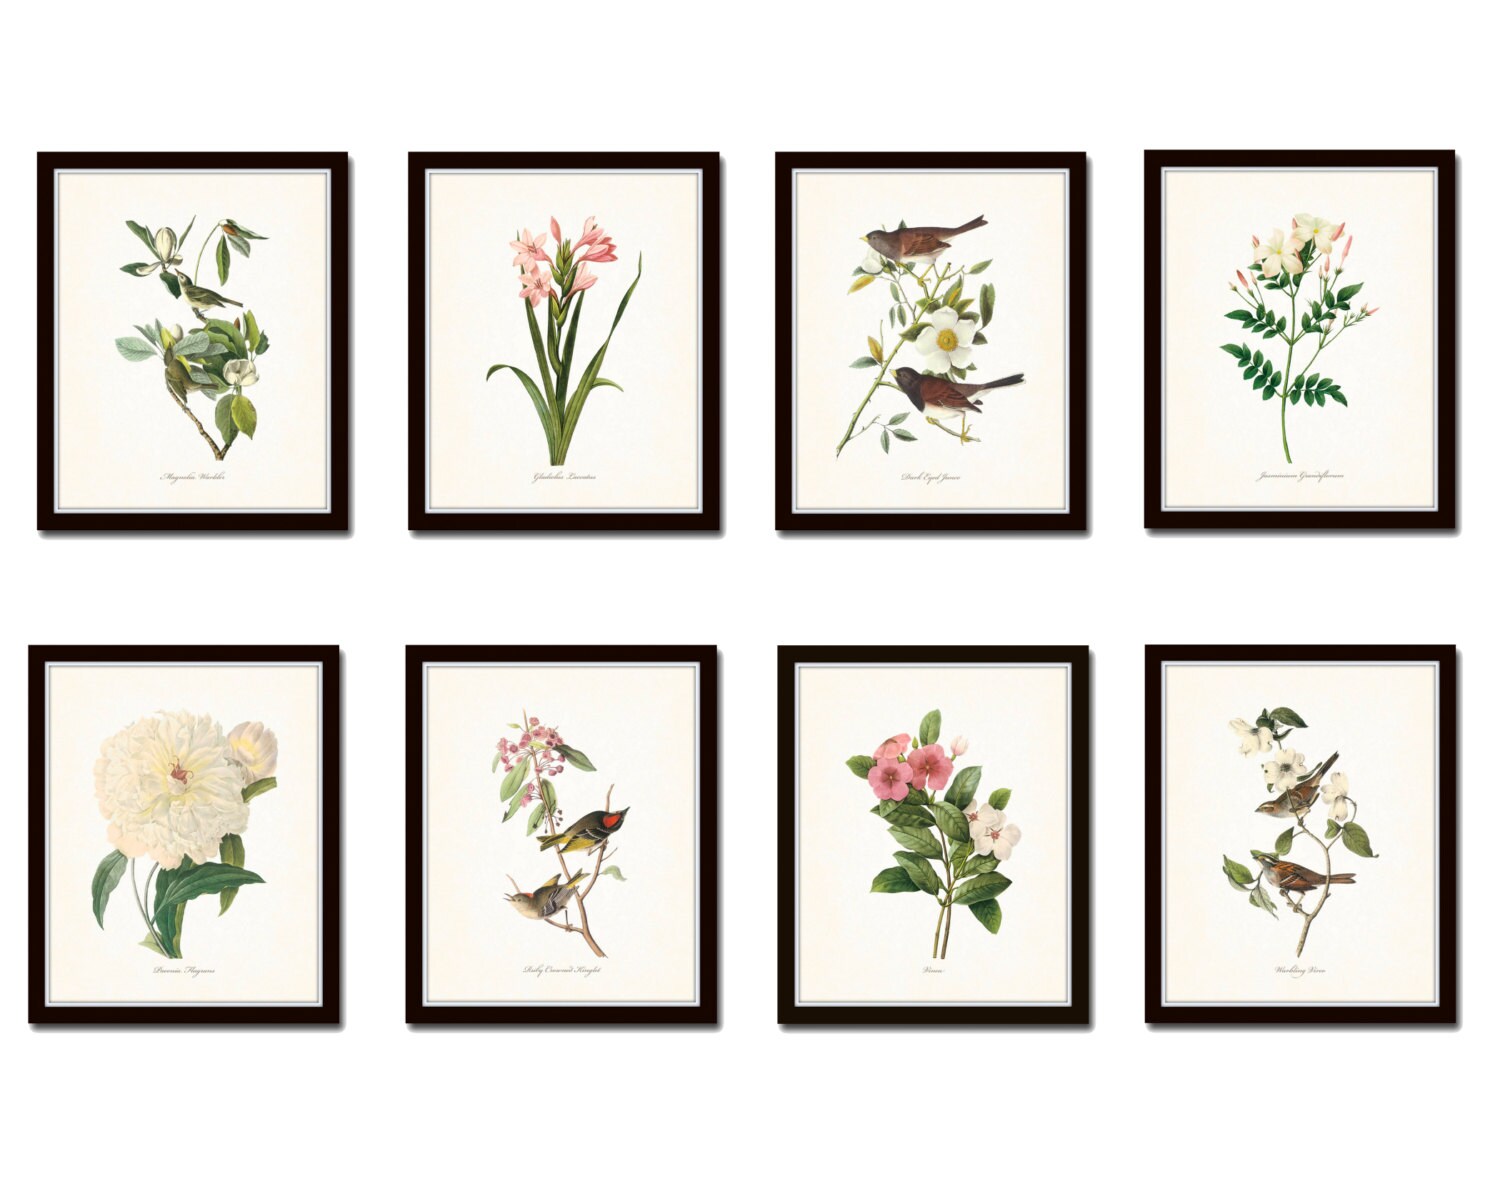 Botanical Print Flower Botanicals Print Set Vintage Botanicals Flower Wall Art Prints Botanical Prints Japanese Flower Illustrations